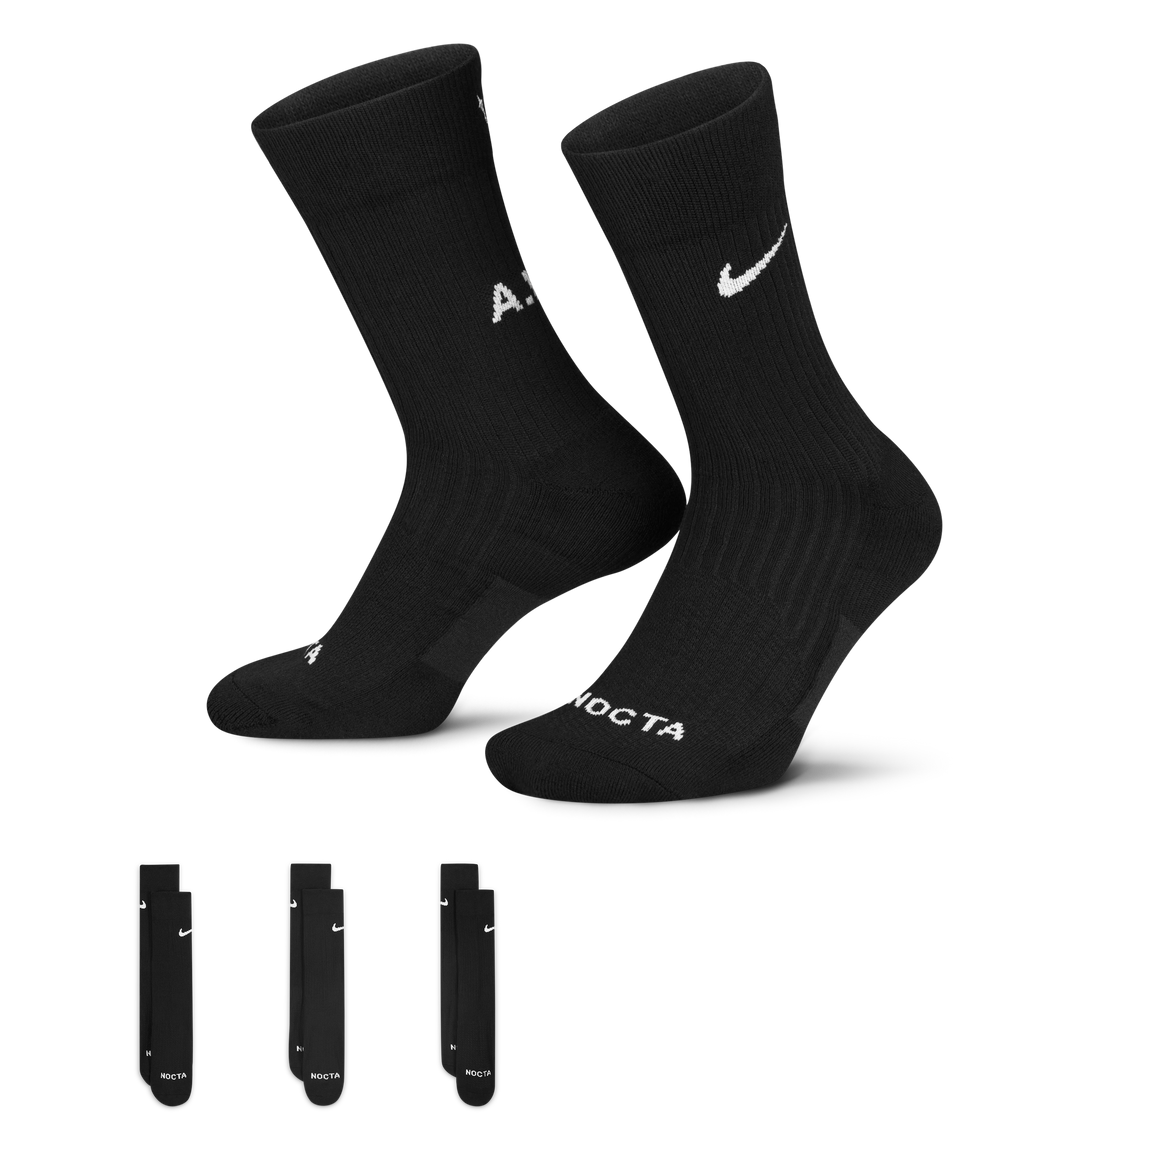 NOCTA x Nike Crew Socks 3-Pack (Black/White) 3/15 - NOCTA x Nike Crew Socks 3-Pack (Black/White) 3/15 - 